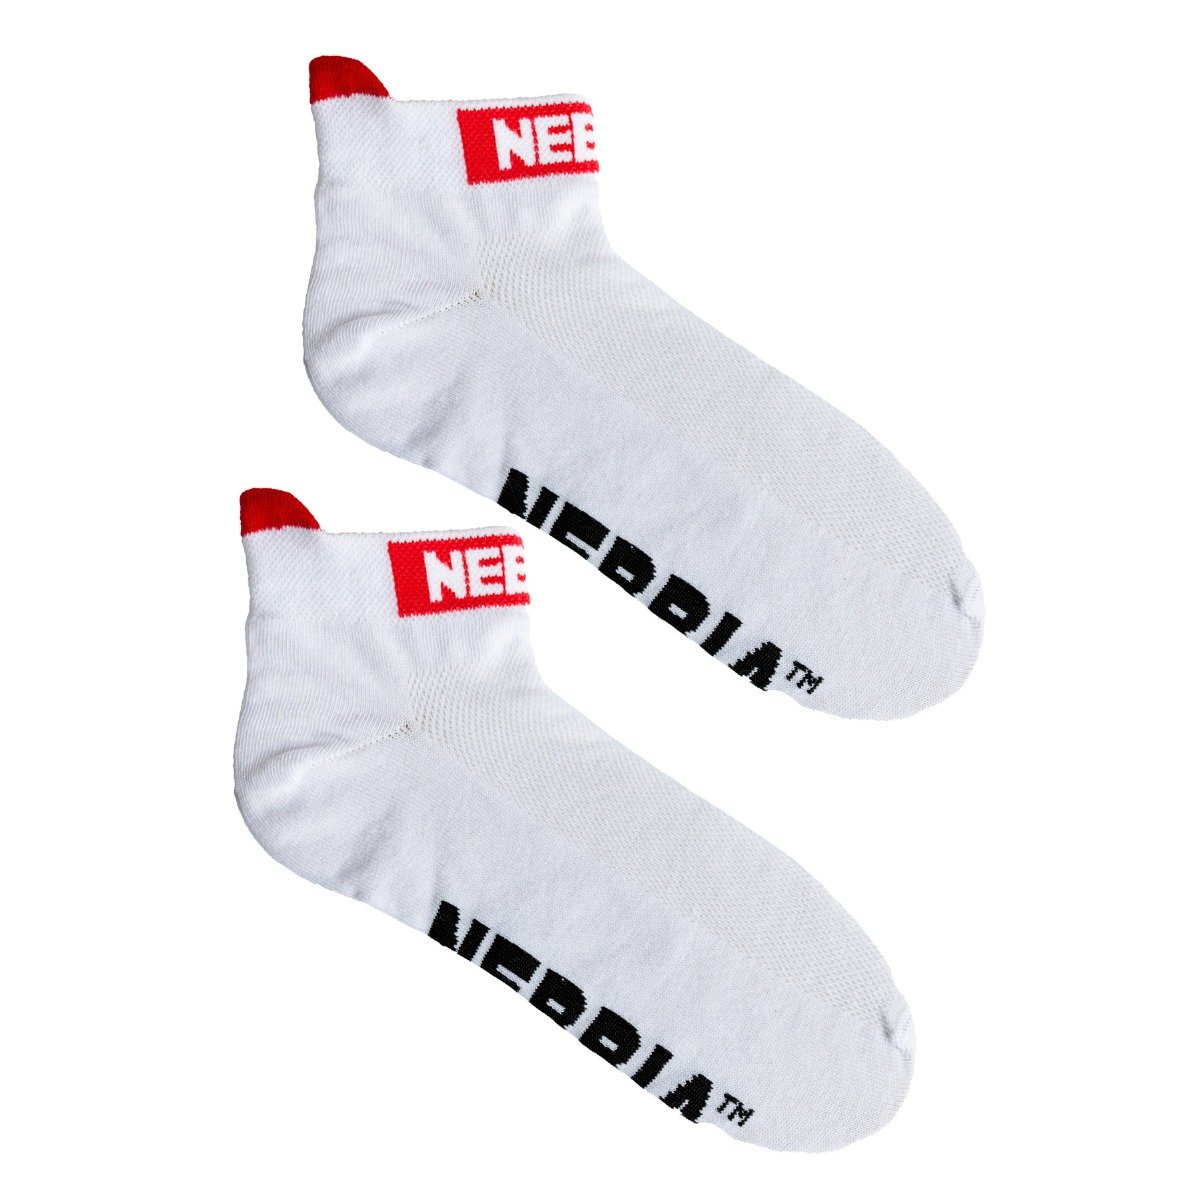 Ponožky Ankle Socks Smash It White 43 - 46 - NEBBIA NEBBIA